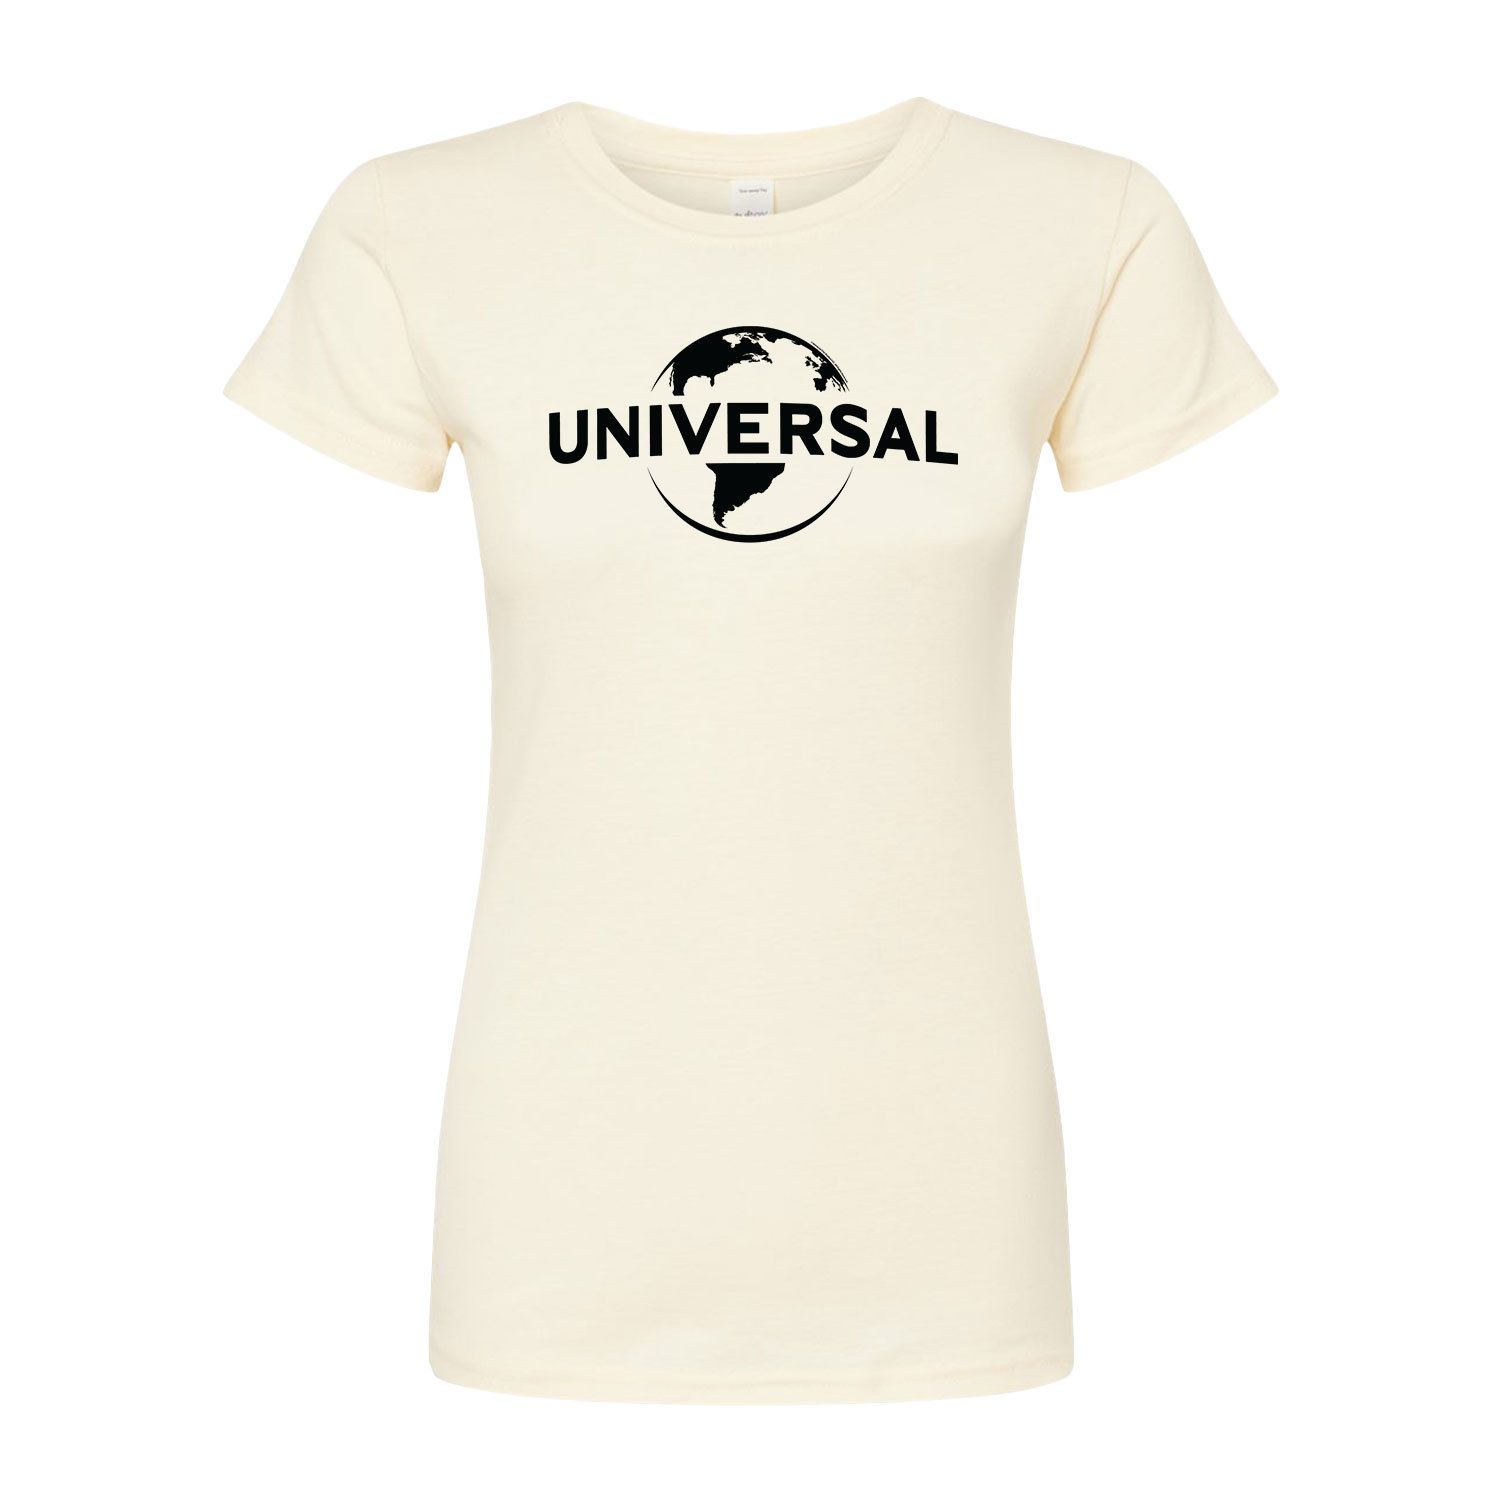 Юниорская футболка с логотипом Universal Licensed Character, бежевый